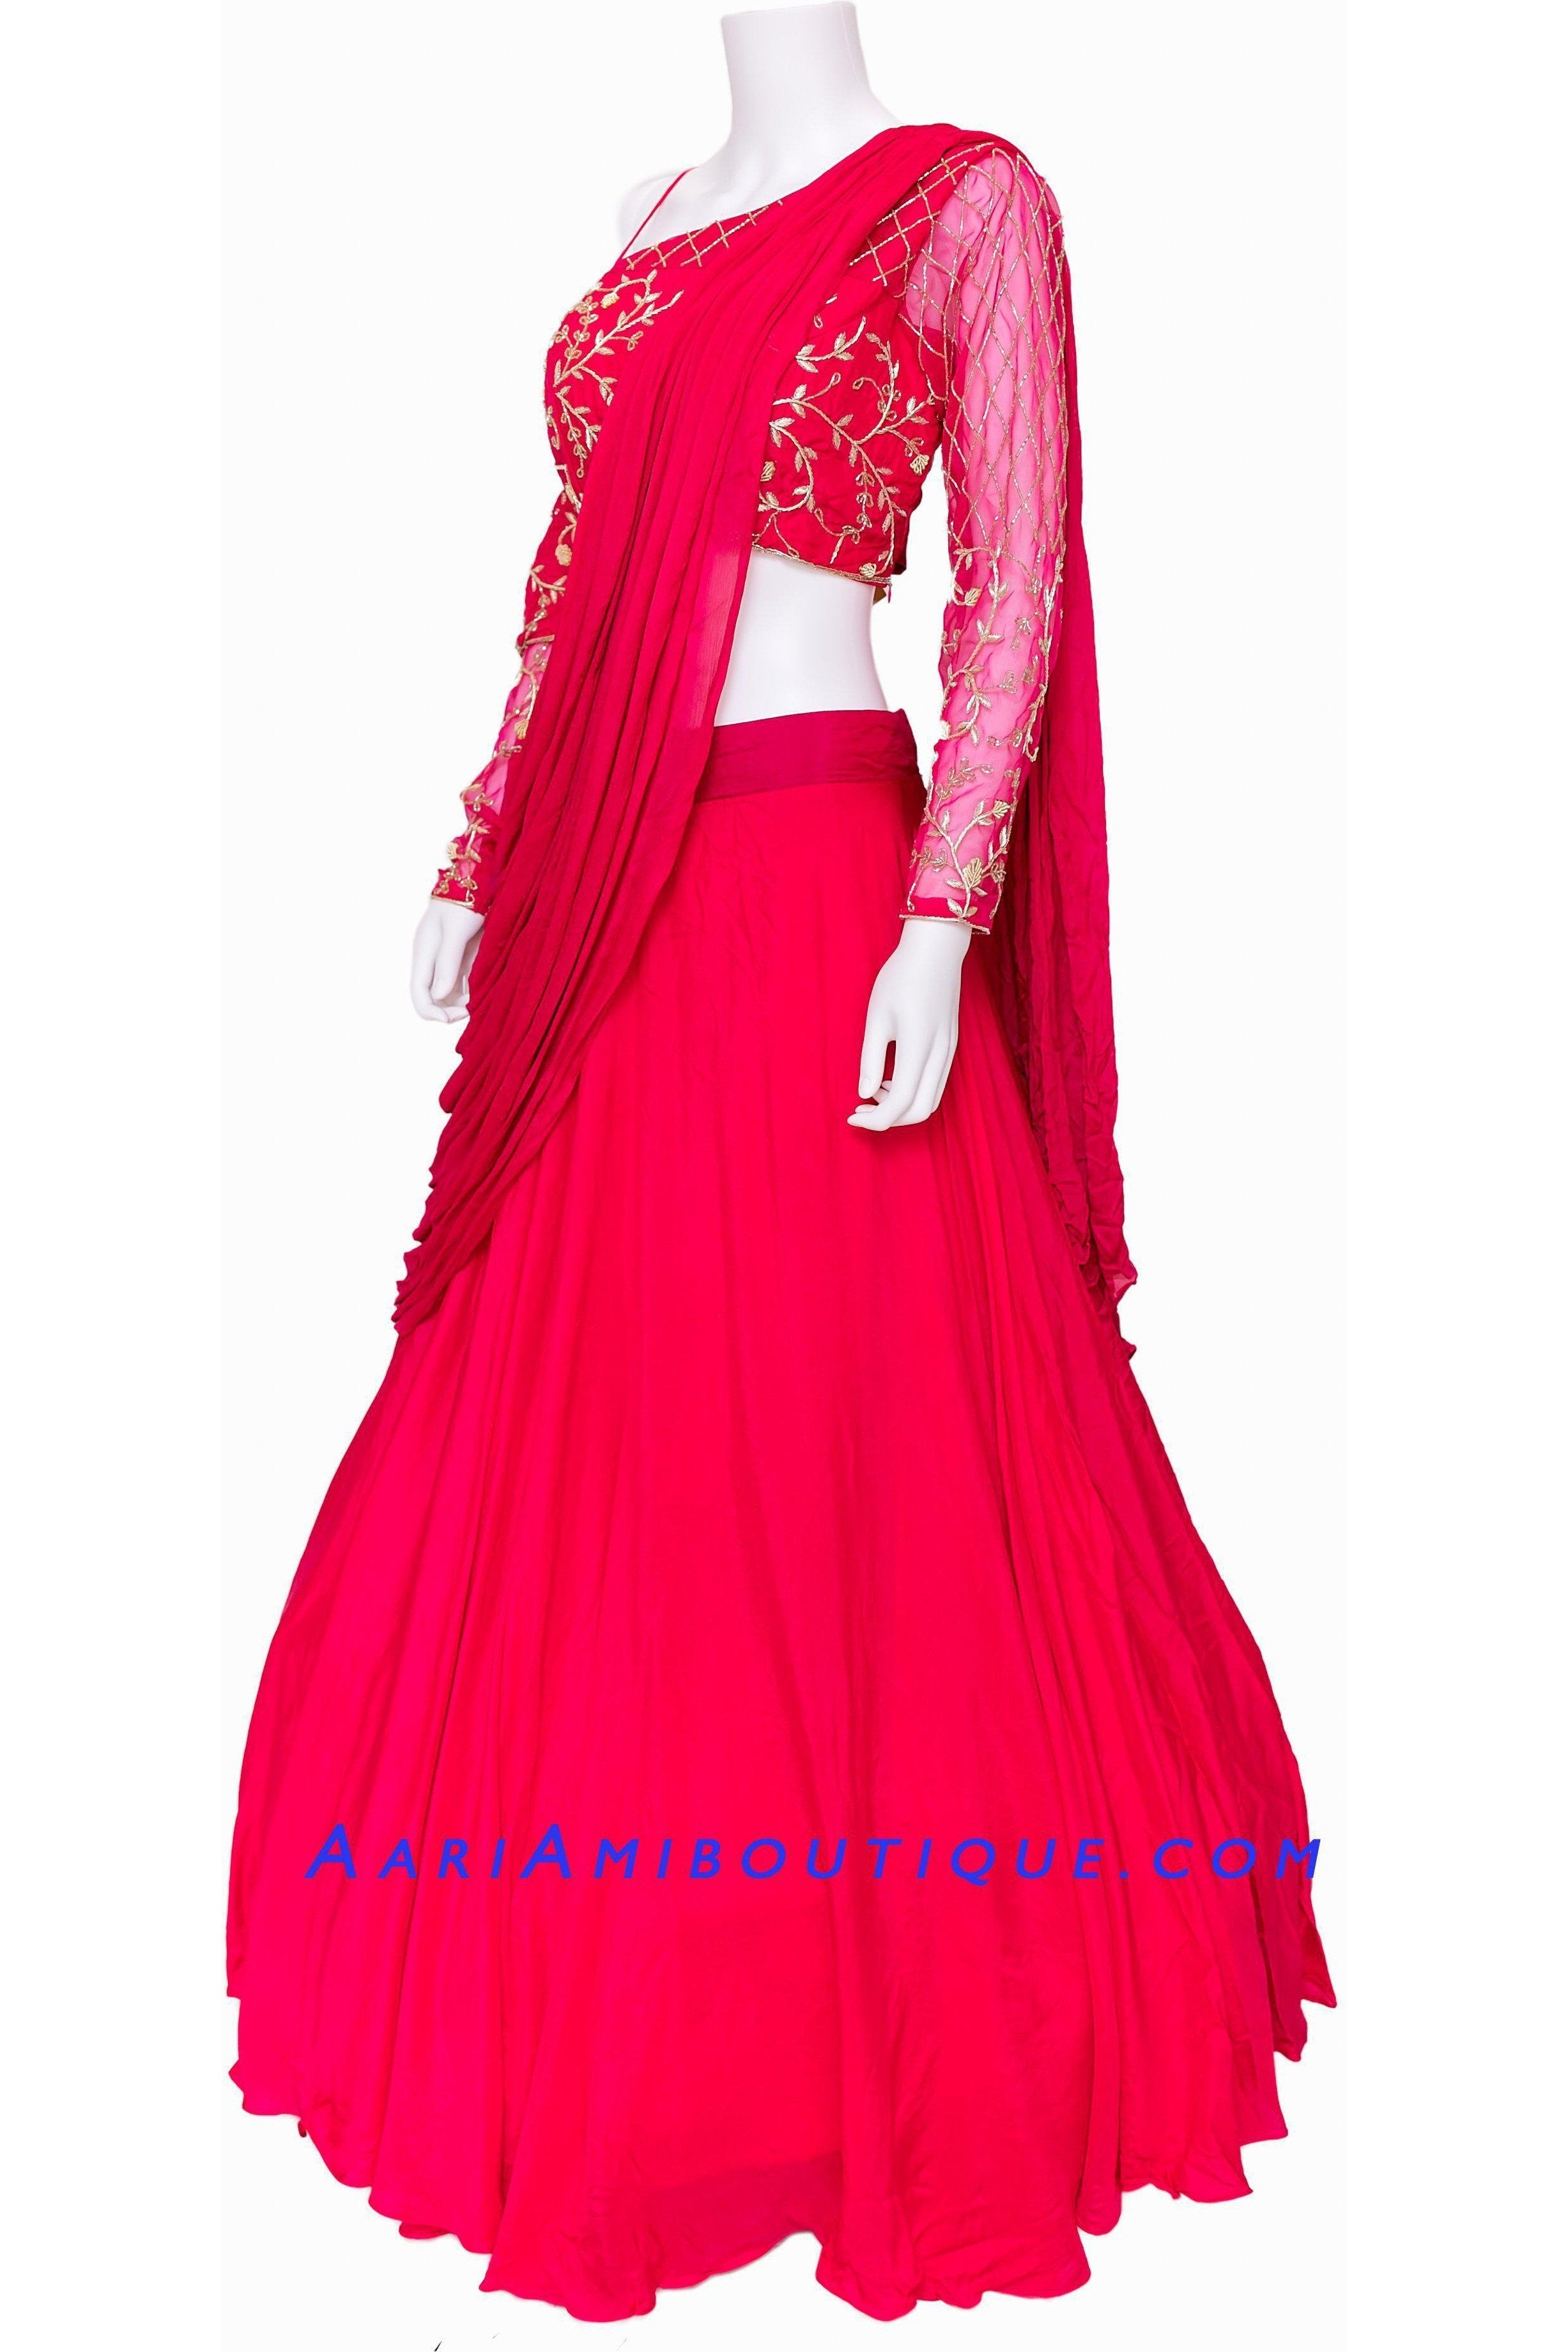 Irresistible Powder Pink and Red Colored Designer Lehenga Choli, Shop  wedding lehenga choli online